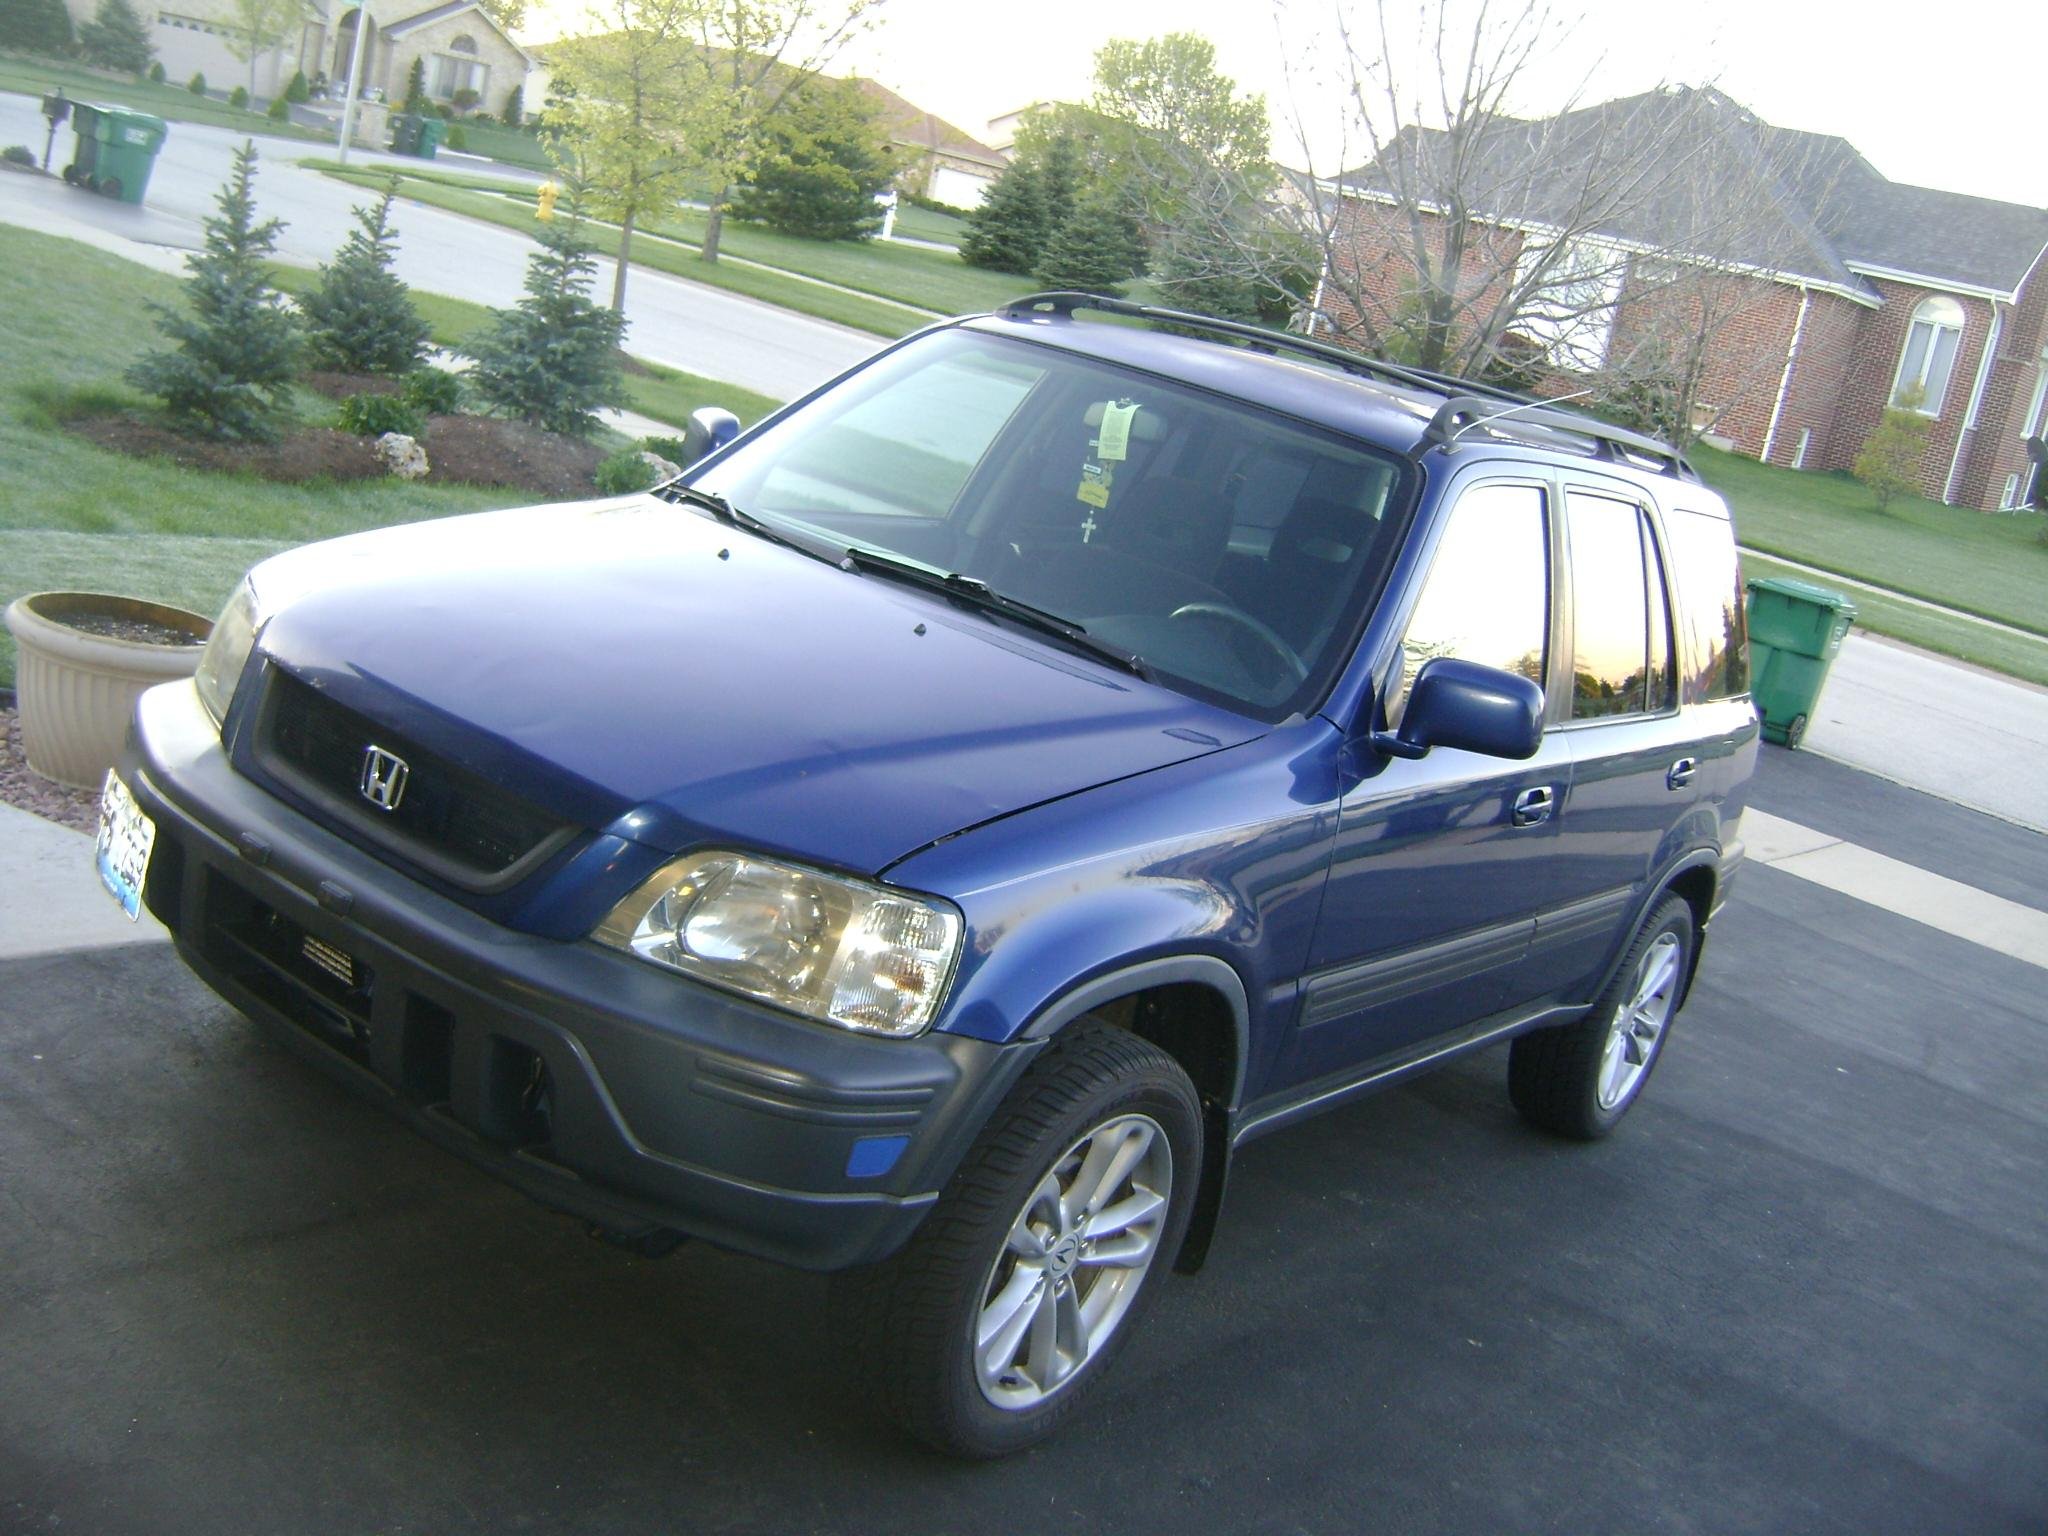 Црв 98 года. Honda CR-V 1999. Honda CRV 1998. Honda CR-V 1 1999. Honda CRV 2001.